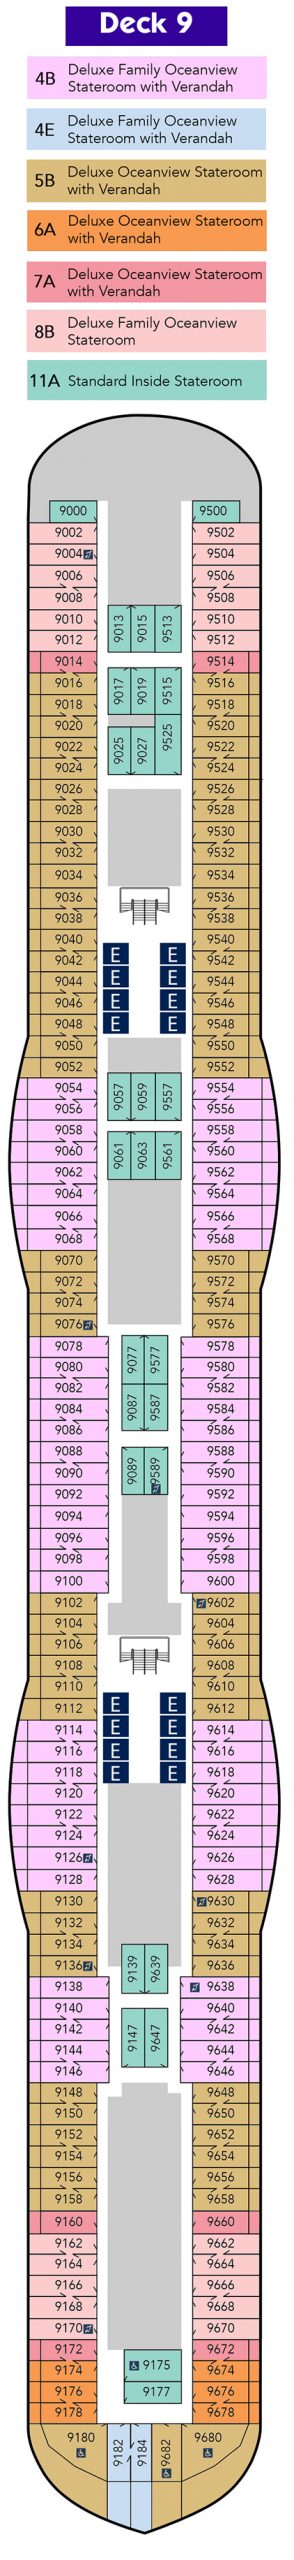 disney cruise ship floor plan